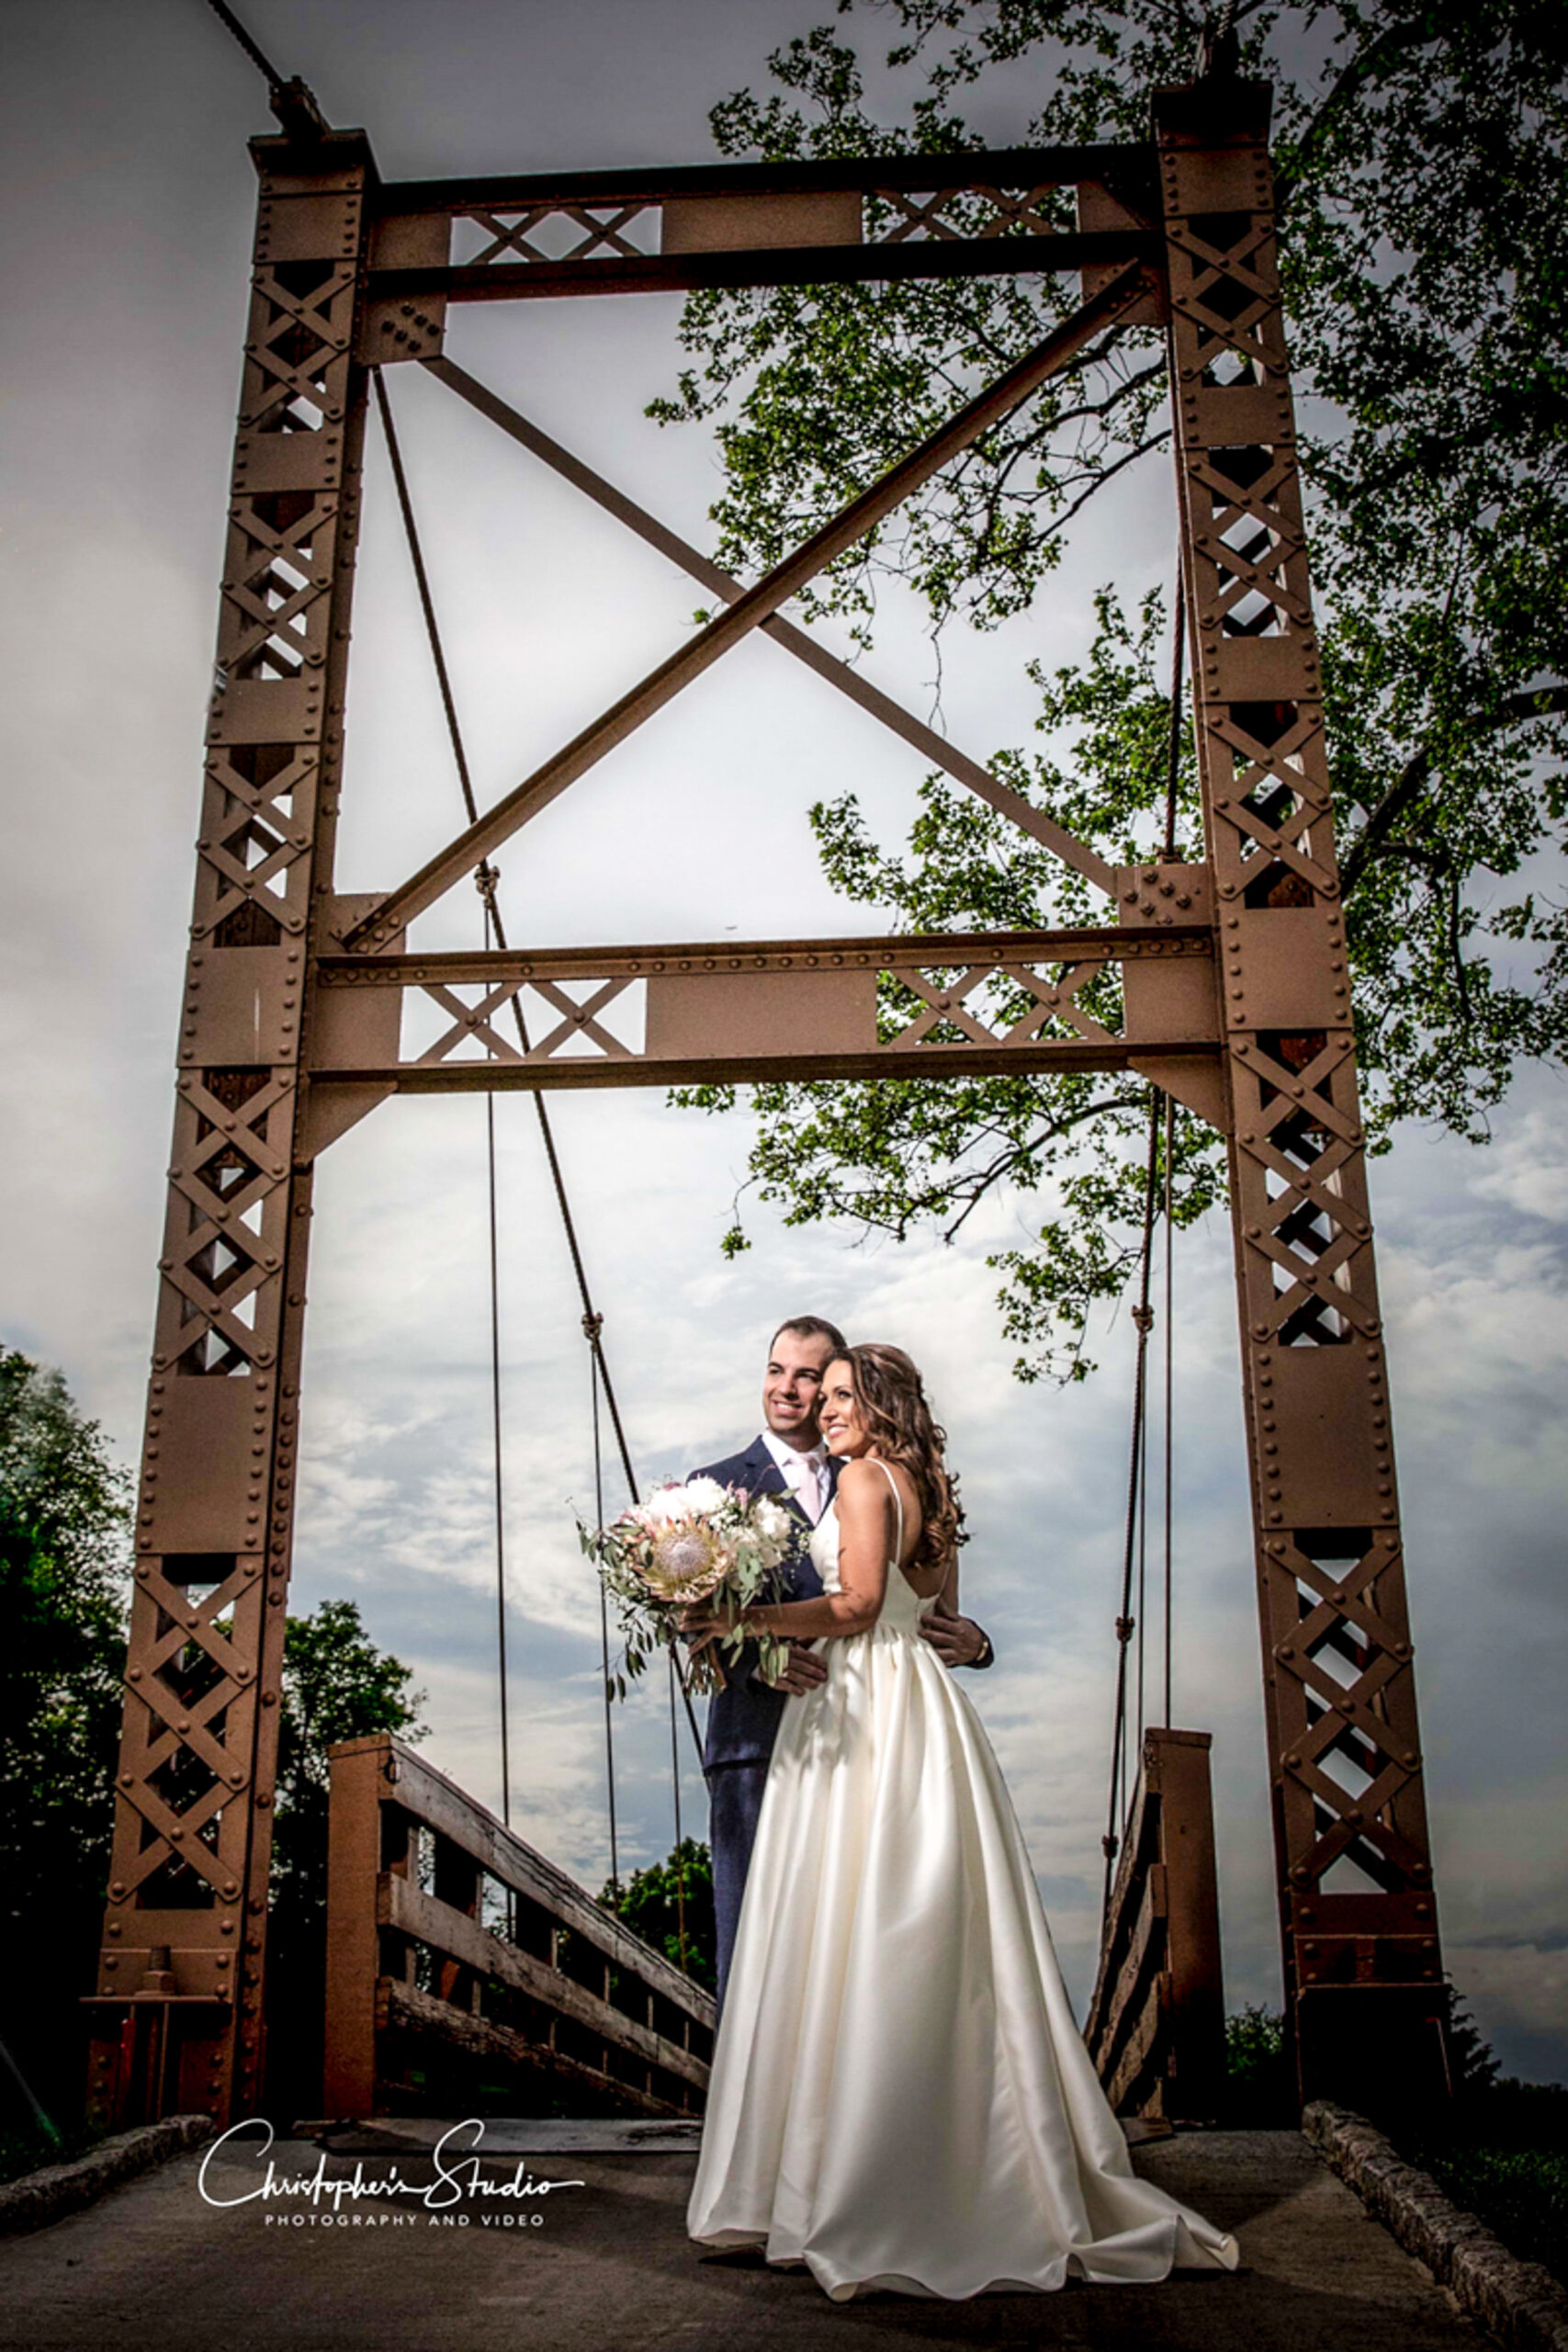 Newlyweds on country club wedding venue bridge for photo session.